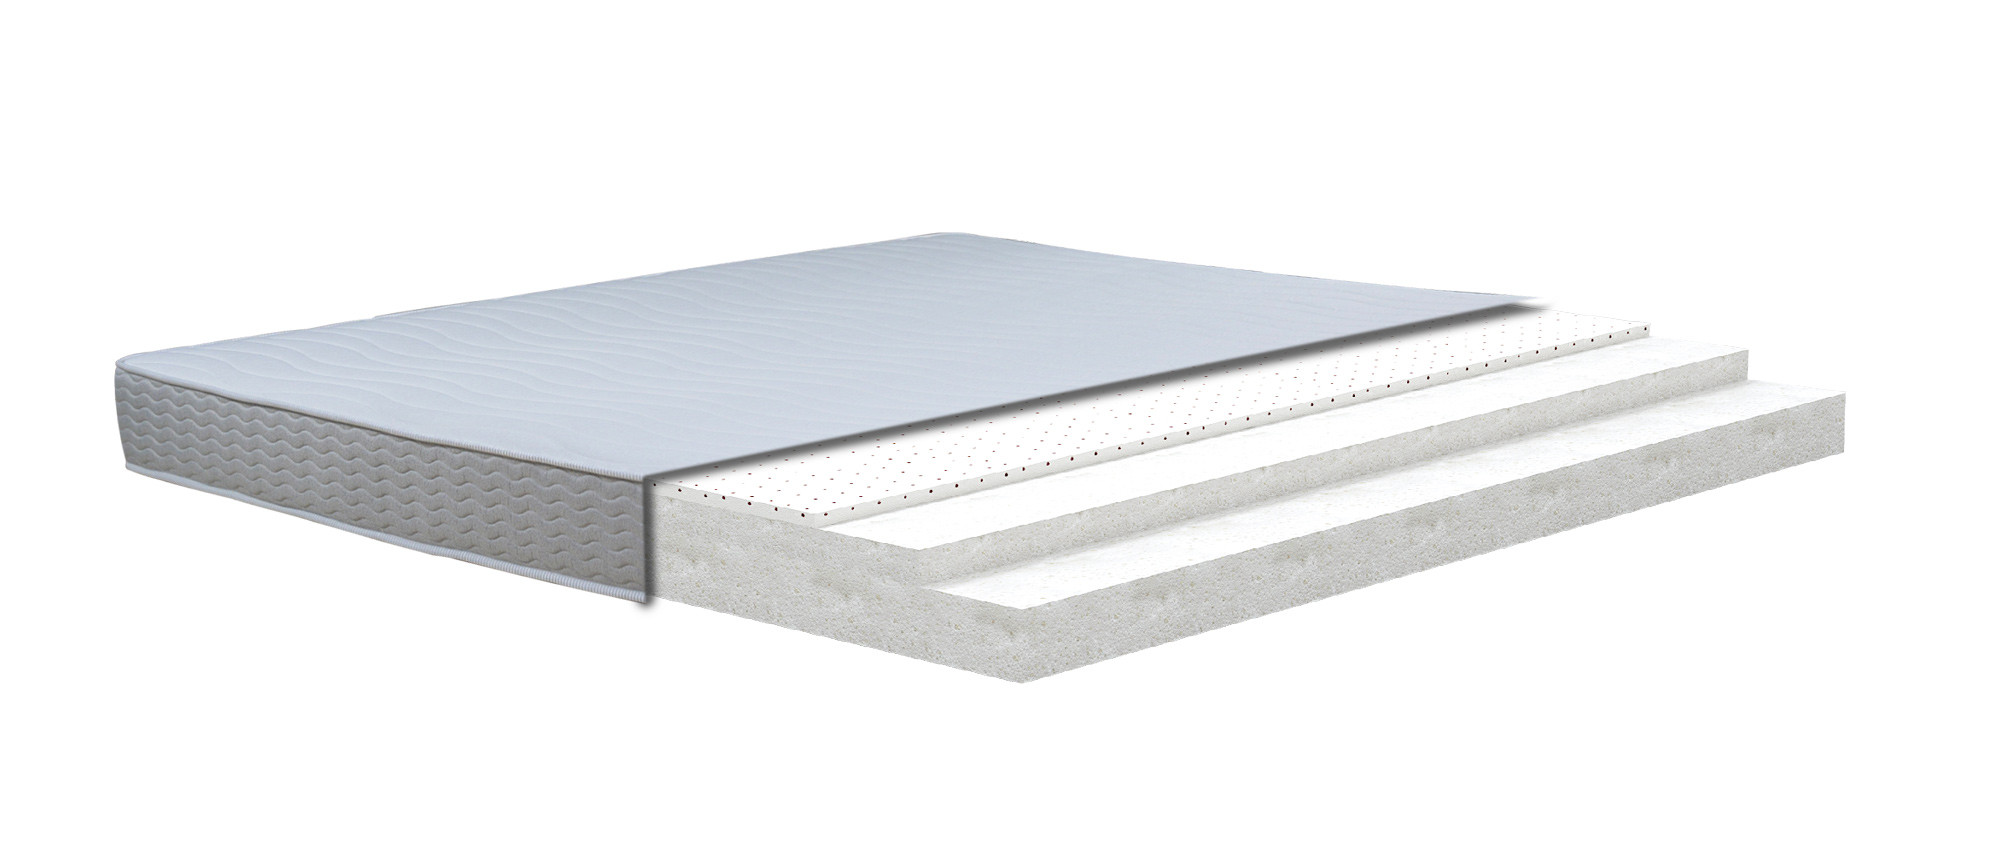 Orthopedic mattress Magic Latex 120x190 medium, 18cm